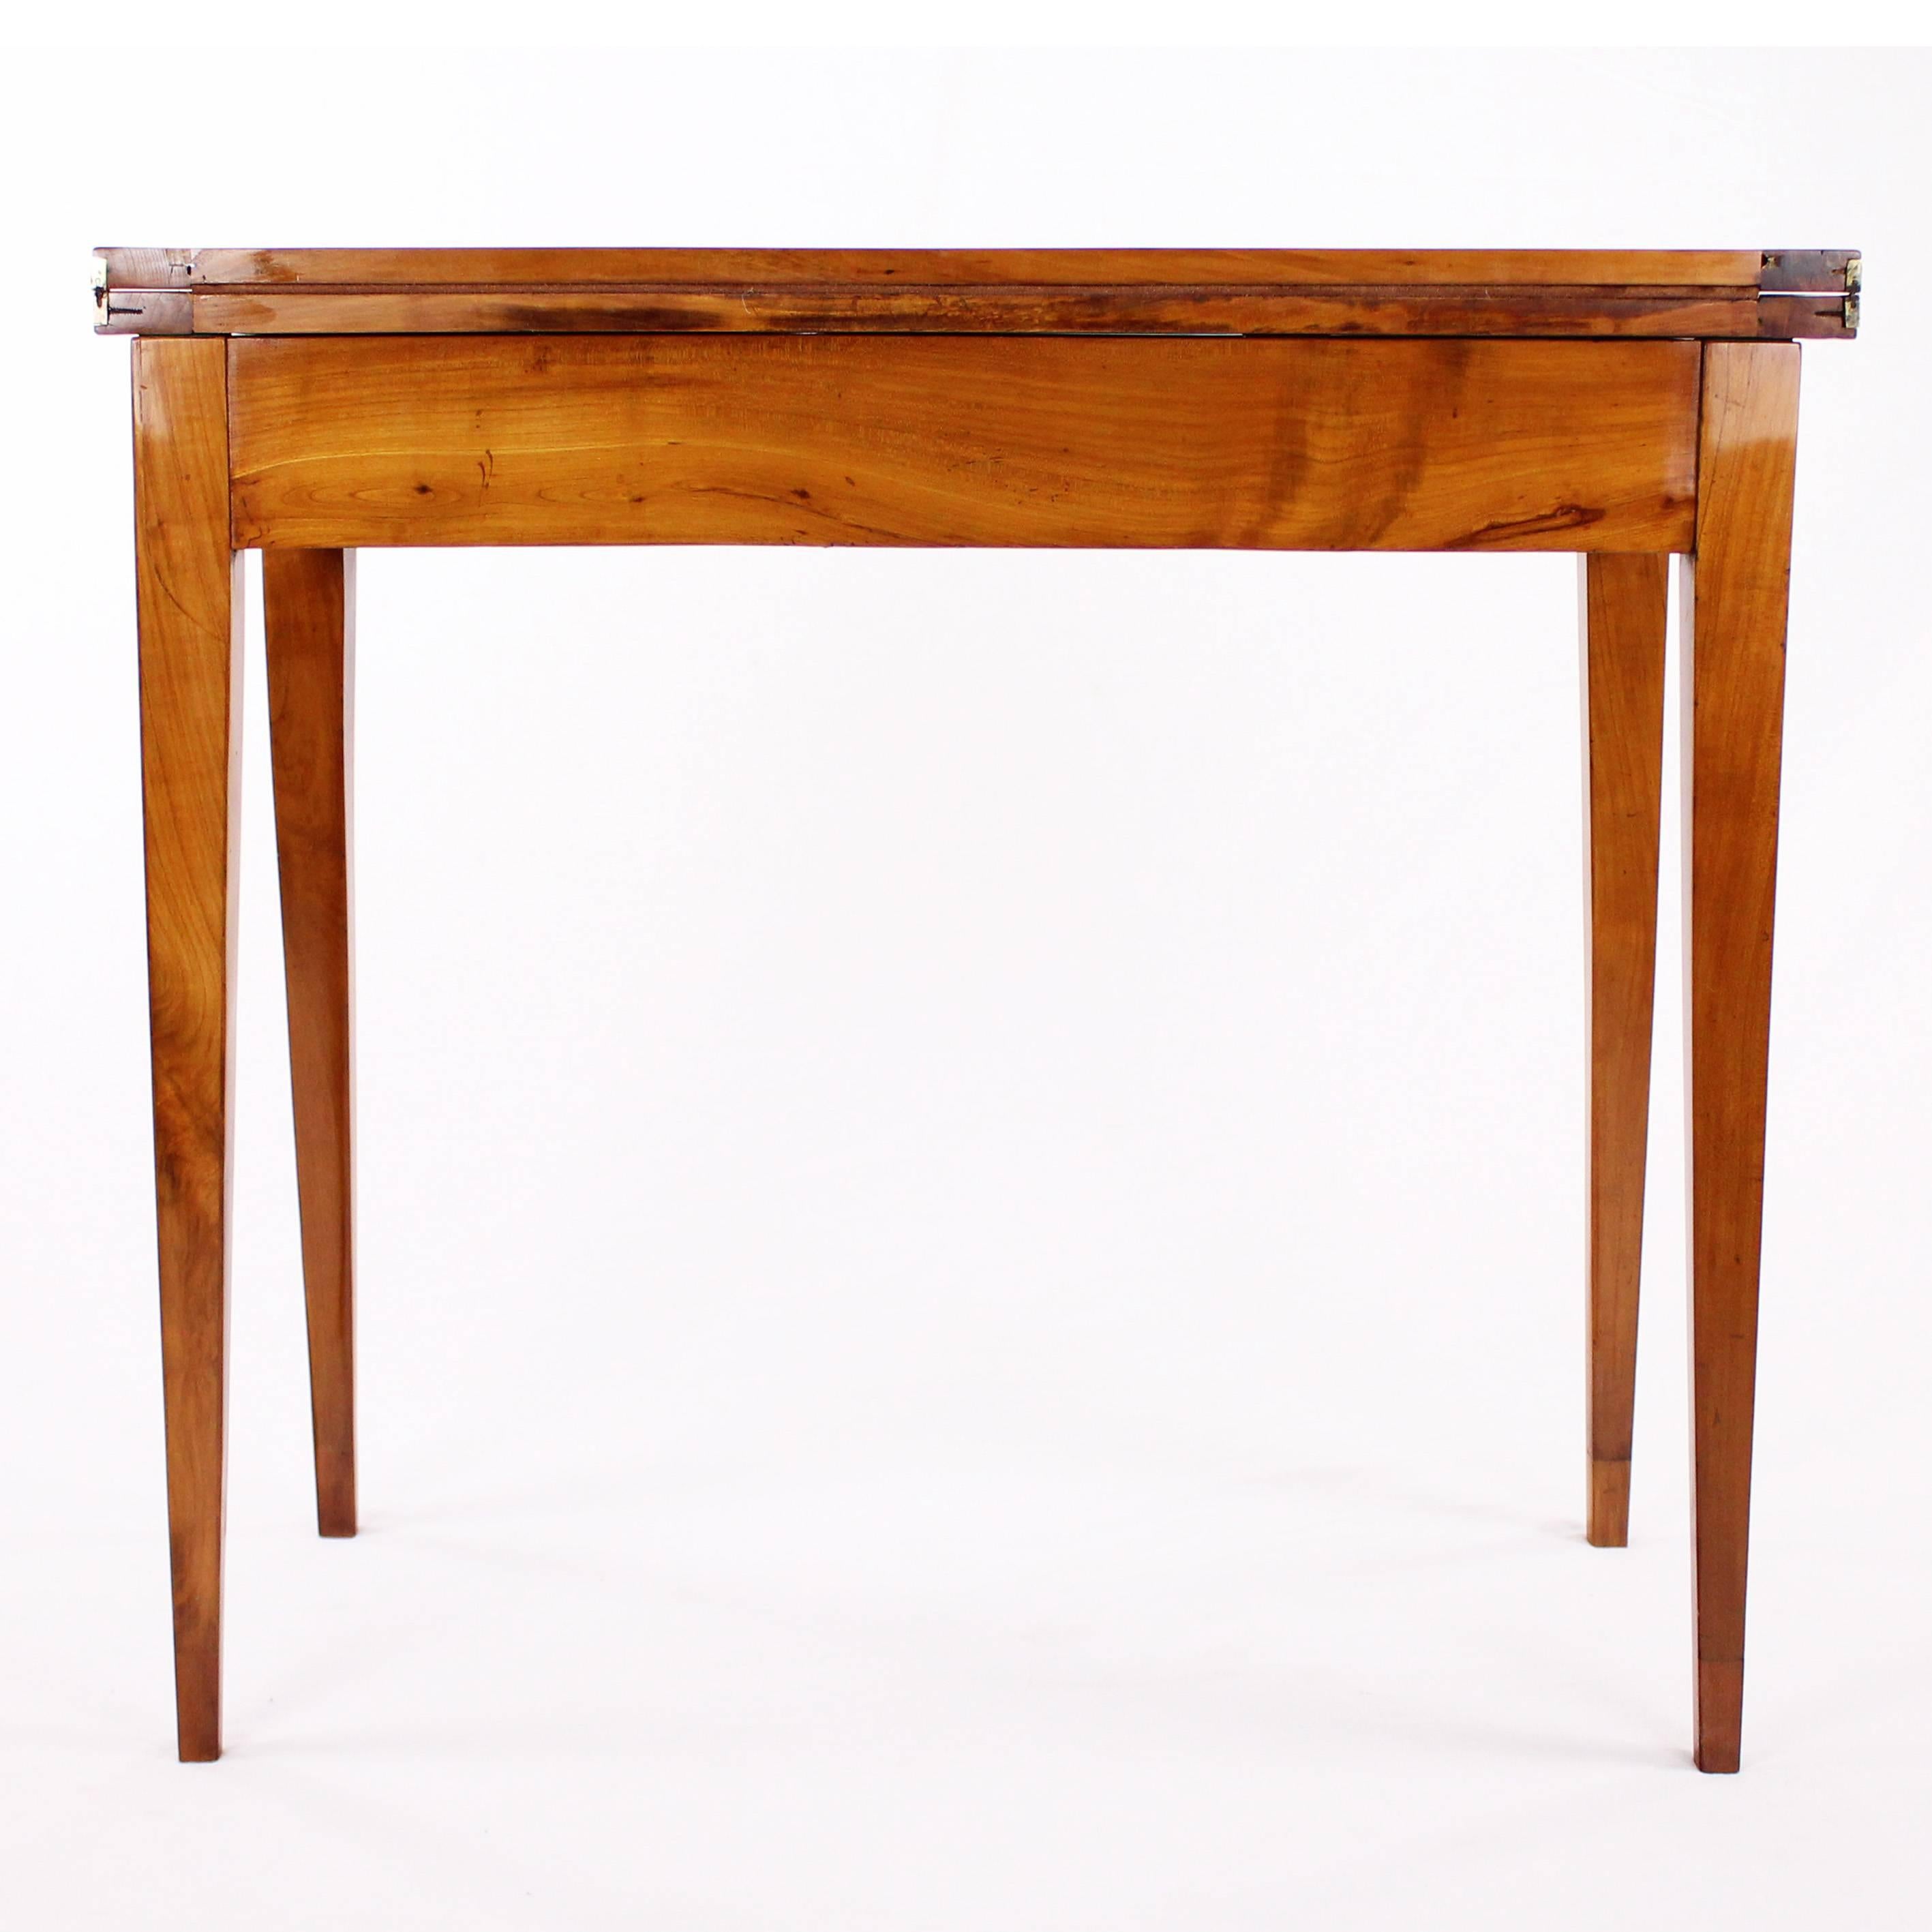 Mid-19th Century Foldable Table, Biedermeier, Cherry Tree, circa 1830-1840, Leather Inside